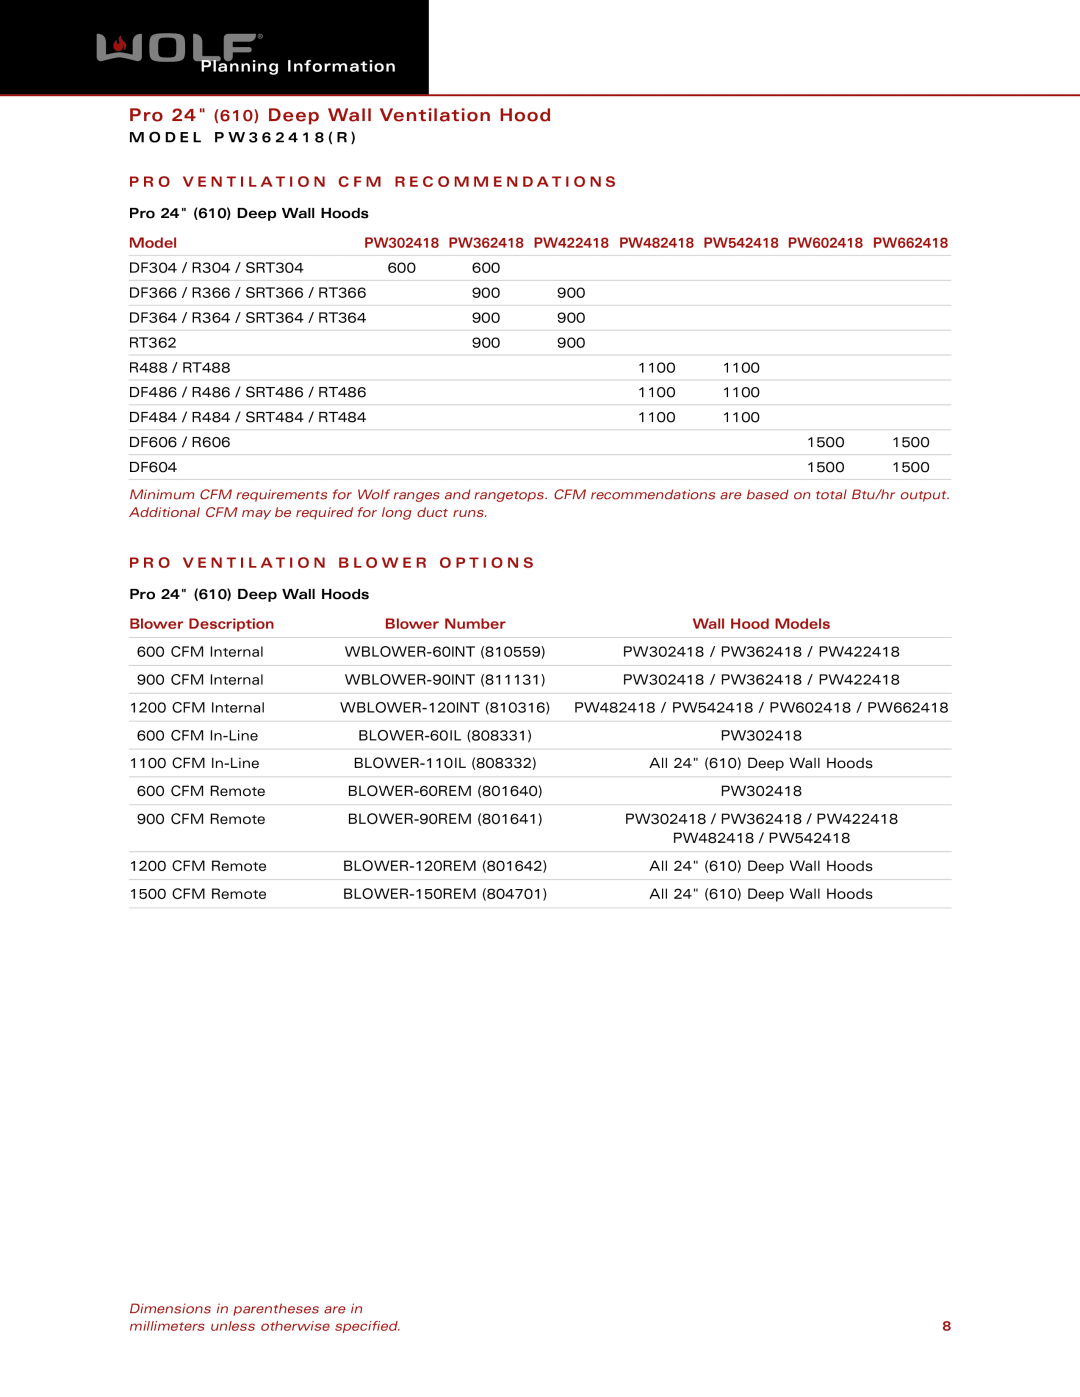 Wolf Appliance Company PW362418 Pro 24 610 Deep Wall Ventilation Hood, Planning Information, M O D E L P W 3 6 2 4 1 8 R 